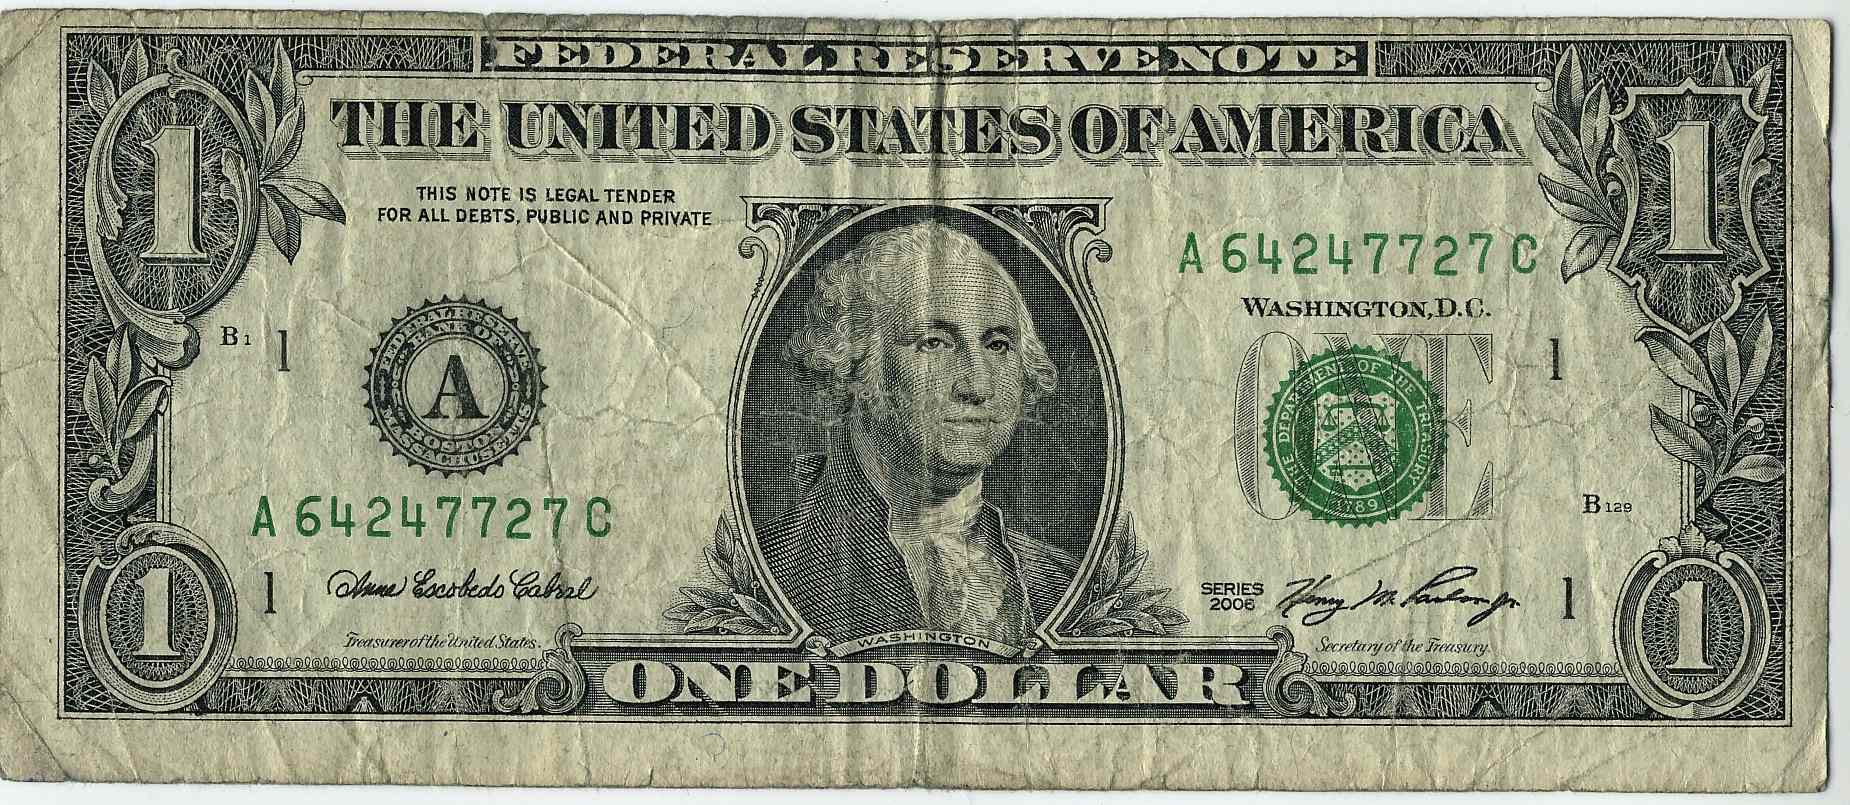 Search Results for “Printable Fake Money 100 Dollar Bills” Calendar 2015